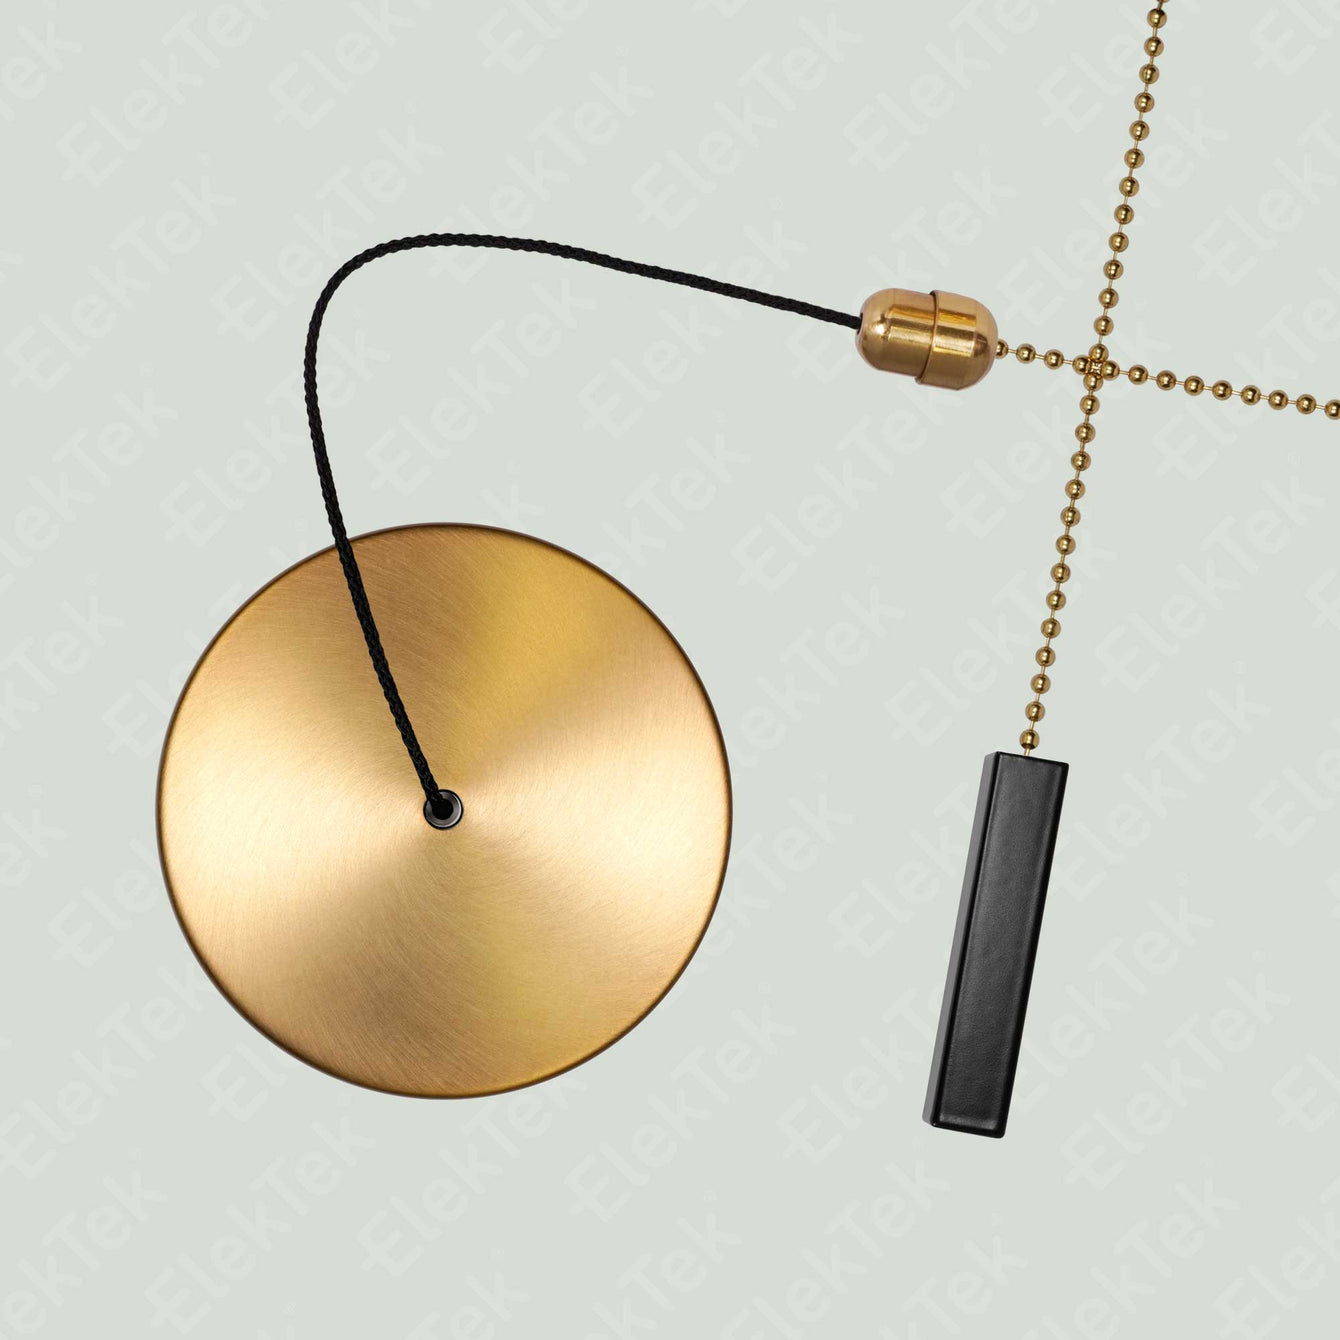 ElekTek Premium Brushed Brass Bathroom Light Pull Cord Switch Kit with Pull Chain Handle Black Square Bar / Black Cord